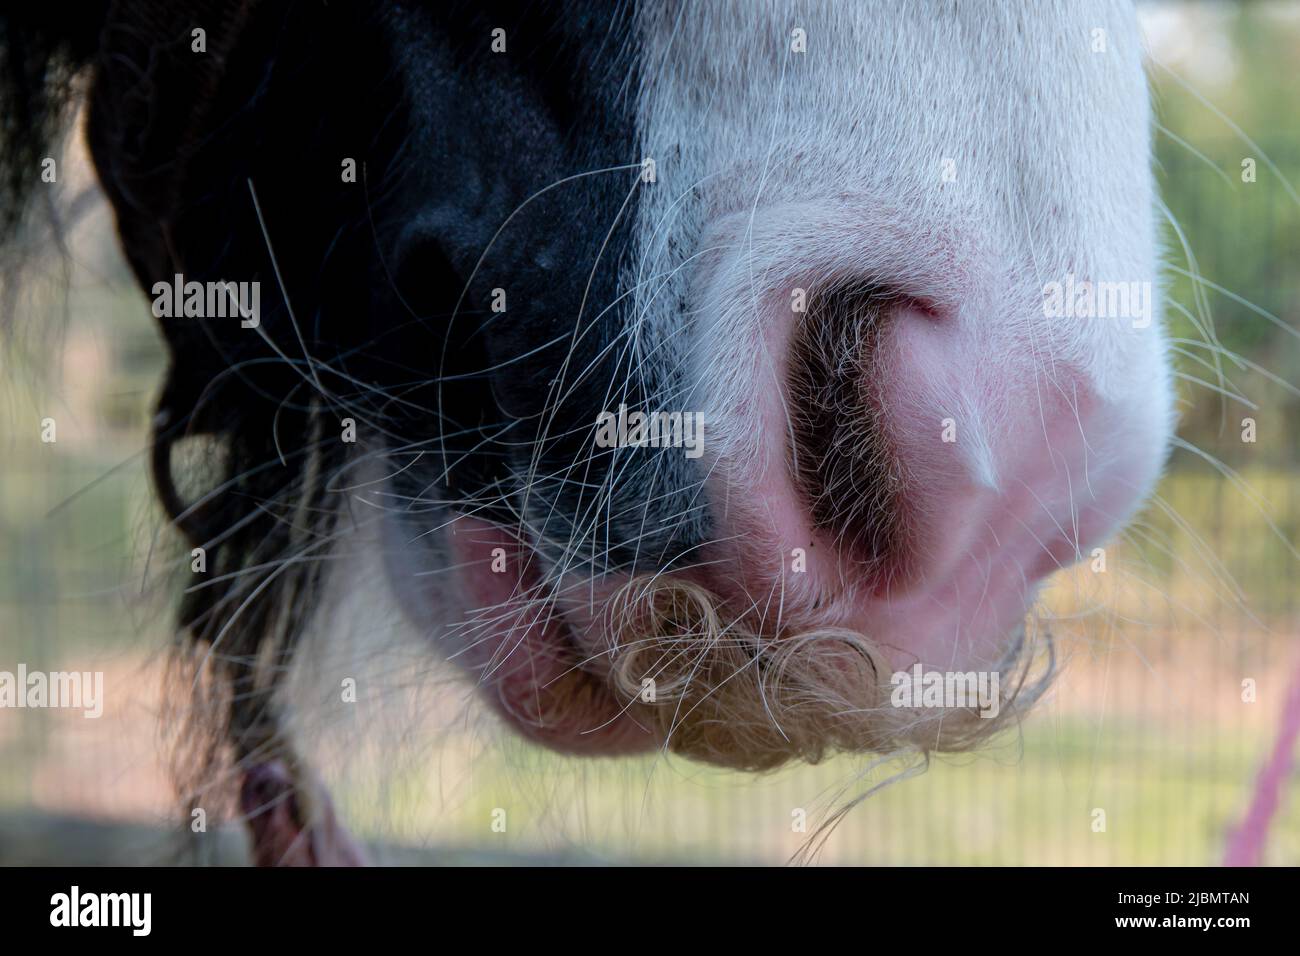 Primer plano de cara de caballo de mazorca gitana que muestra fosa nasal, bigote y susurros Foto de stock